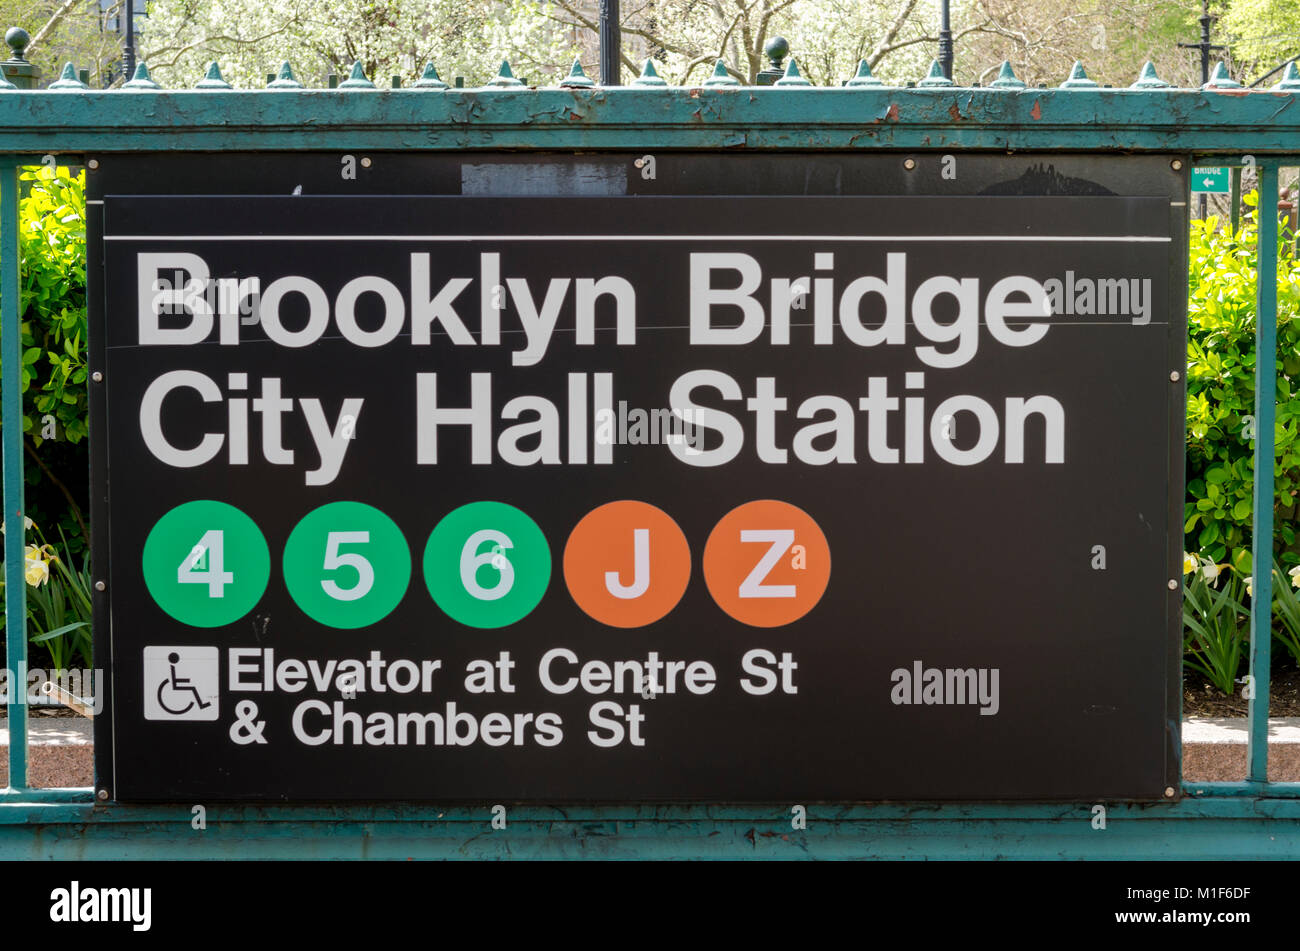 Brooklyn Bridge City Hall sign on outside of New York Metro station Stock Photo